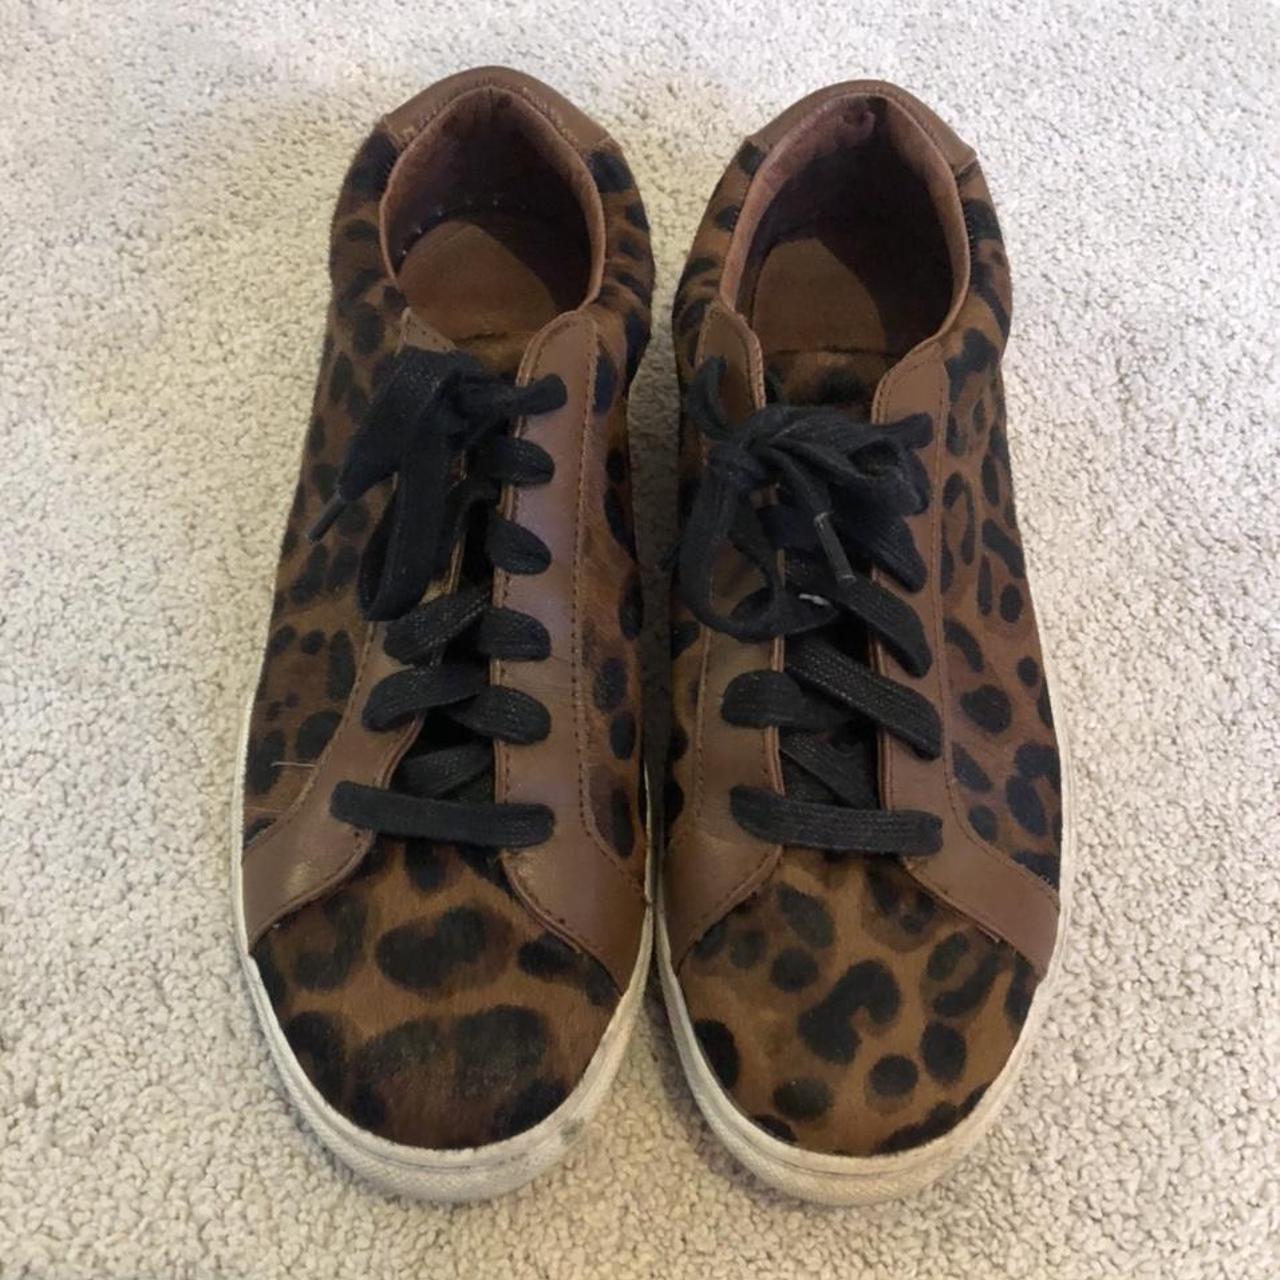 leopard print trainers size 8